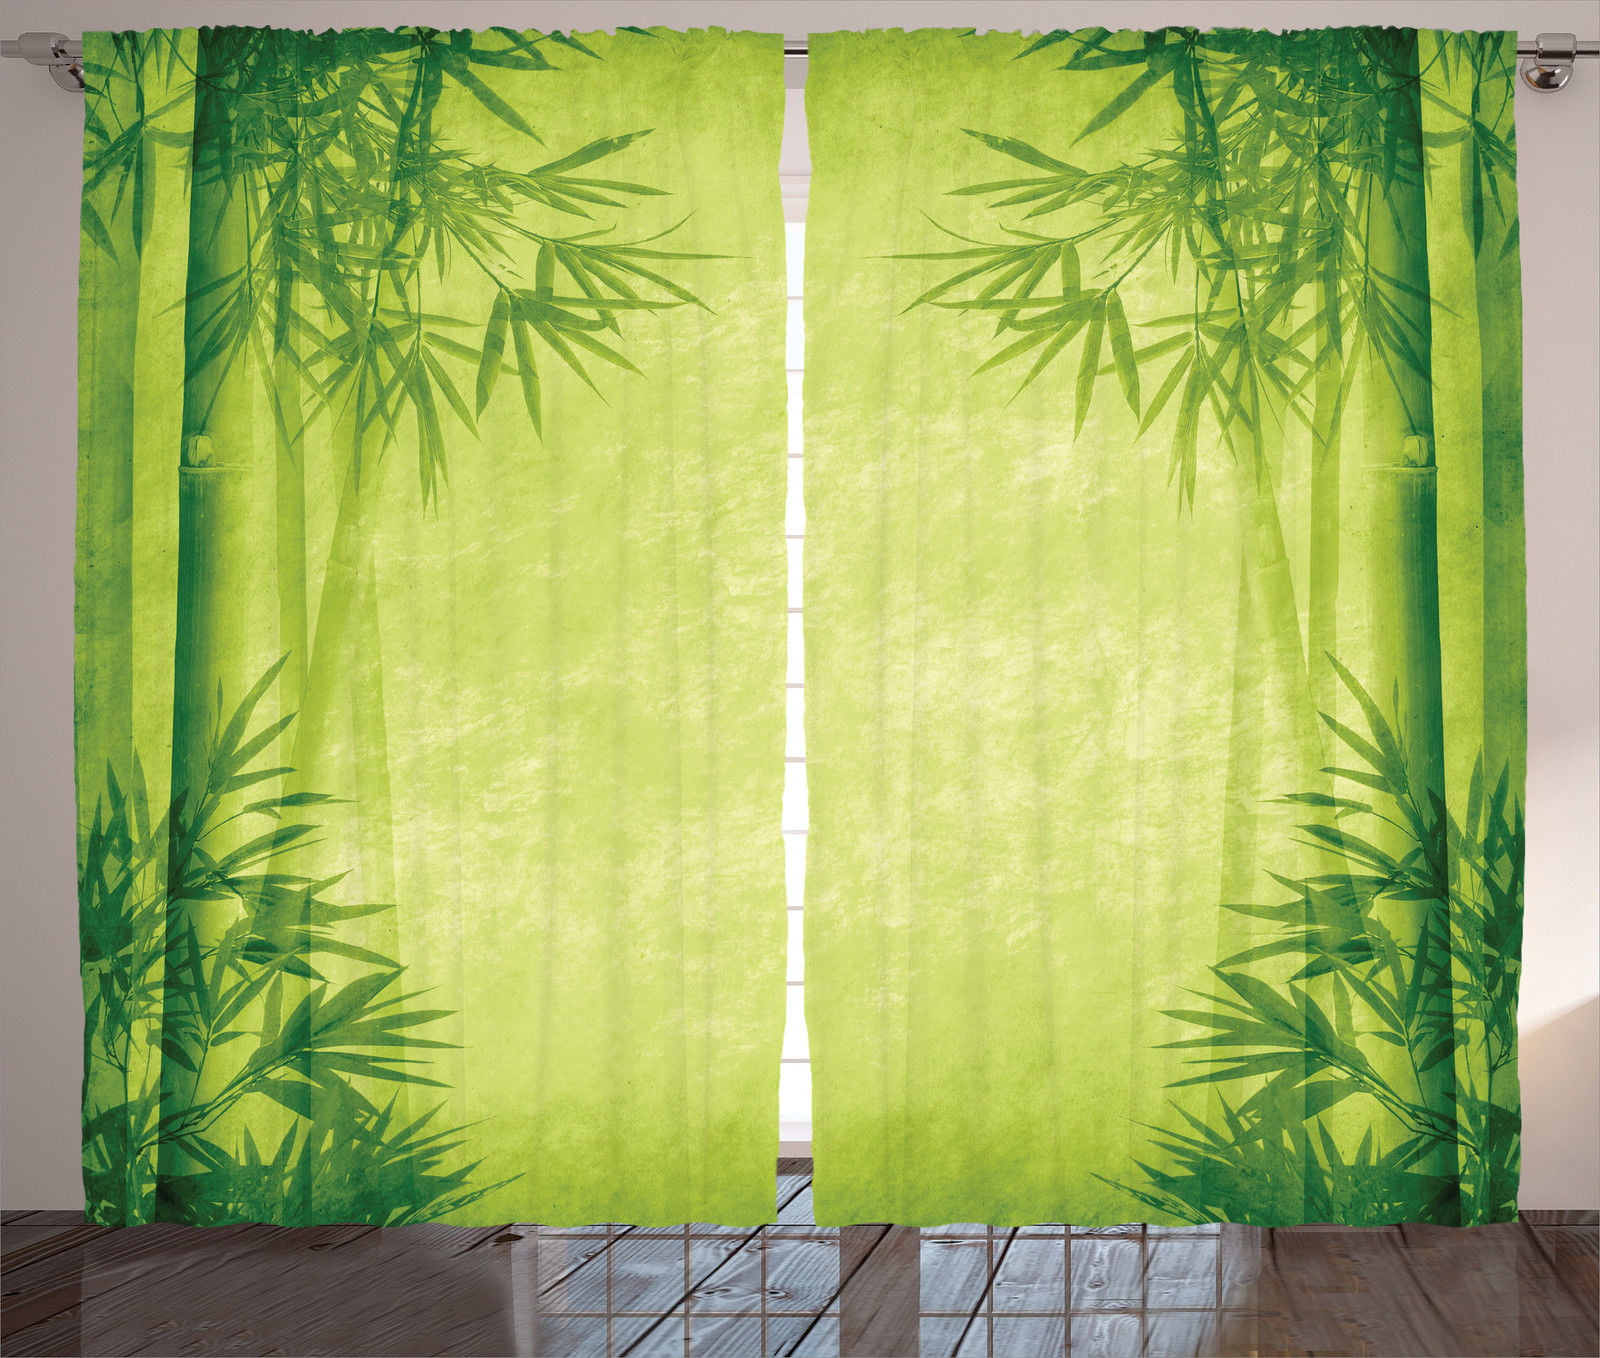 Panda Family Living Bamboo 3D Customize Blockout Photo Curtain Print Window Deco 